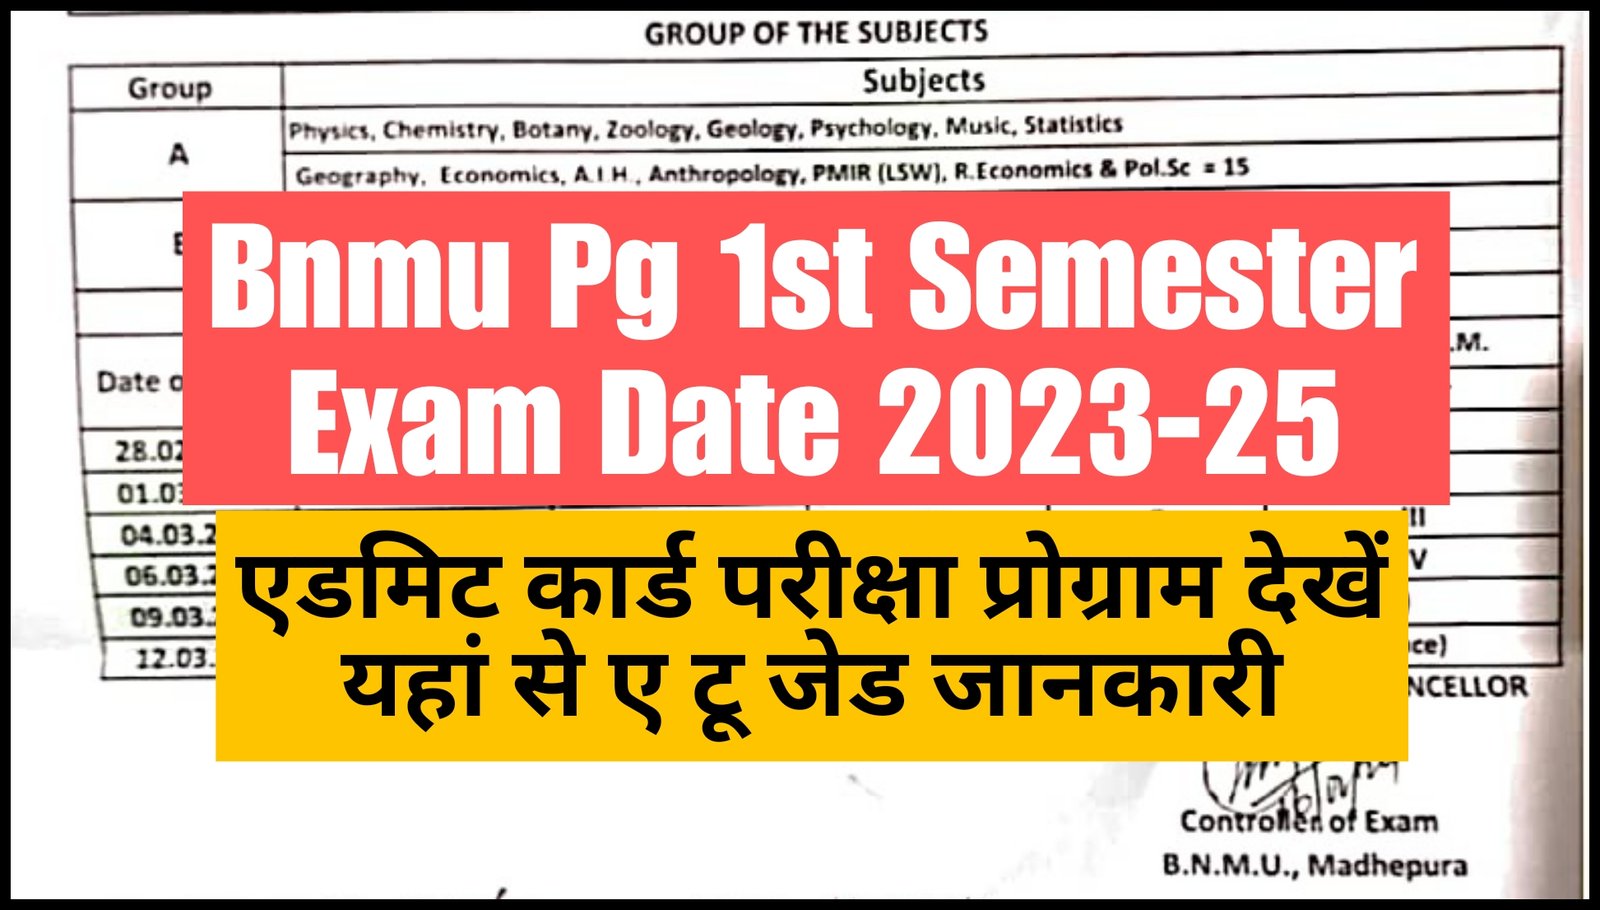 Bnmu Pg 1st Semester Exam Date 2023-25